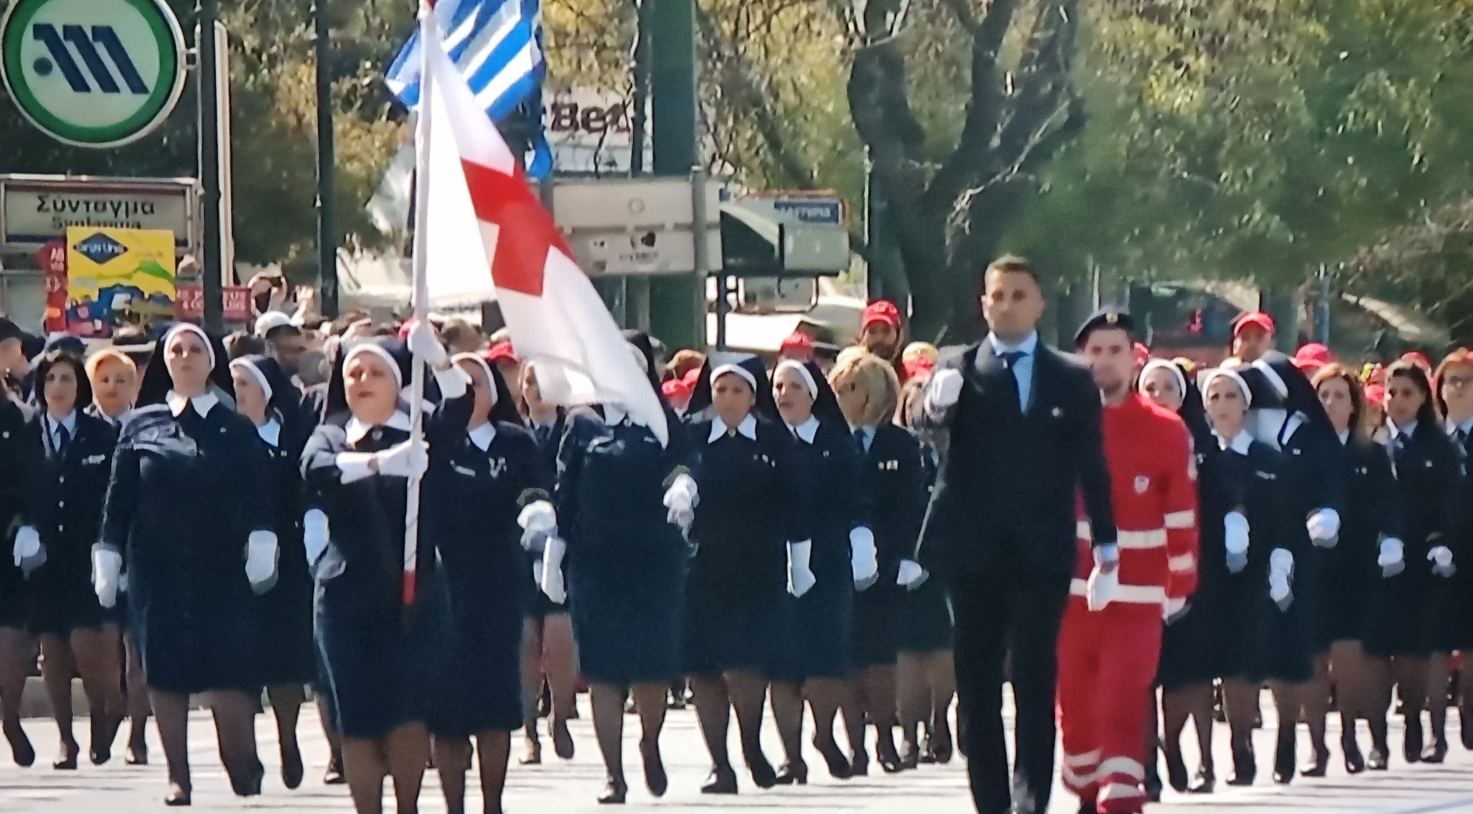 O Ελληνικός Ερυθρός Σταυρός παρήλασε πρώτος στη στρατιωτική παρέλαση της Αθήνας για τον εορτασμό της επετείου της 25ης Μαρτίου